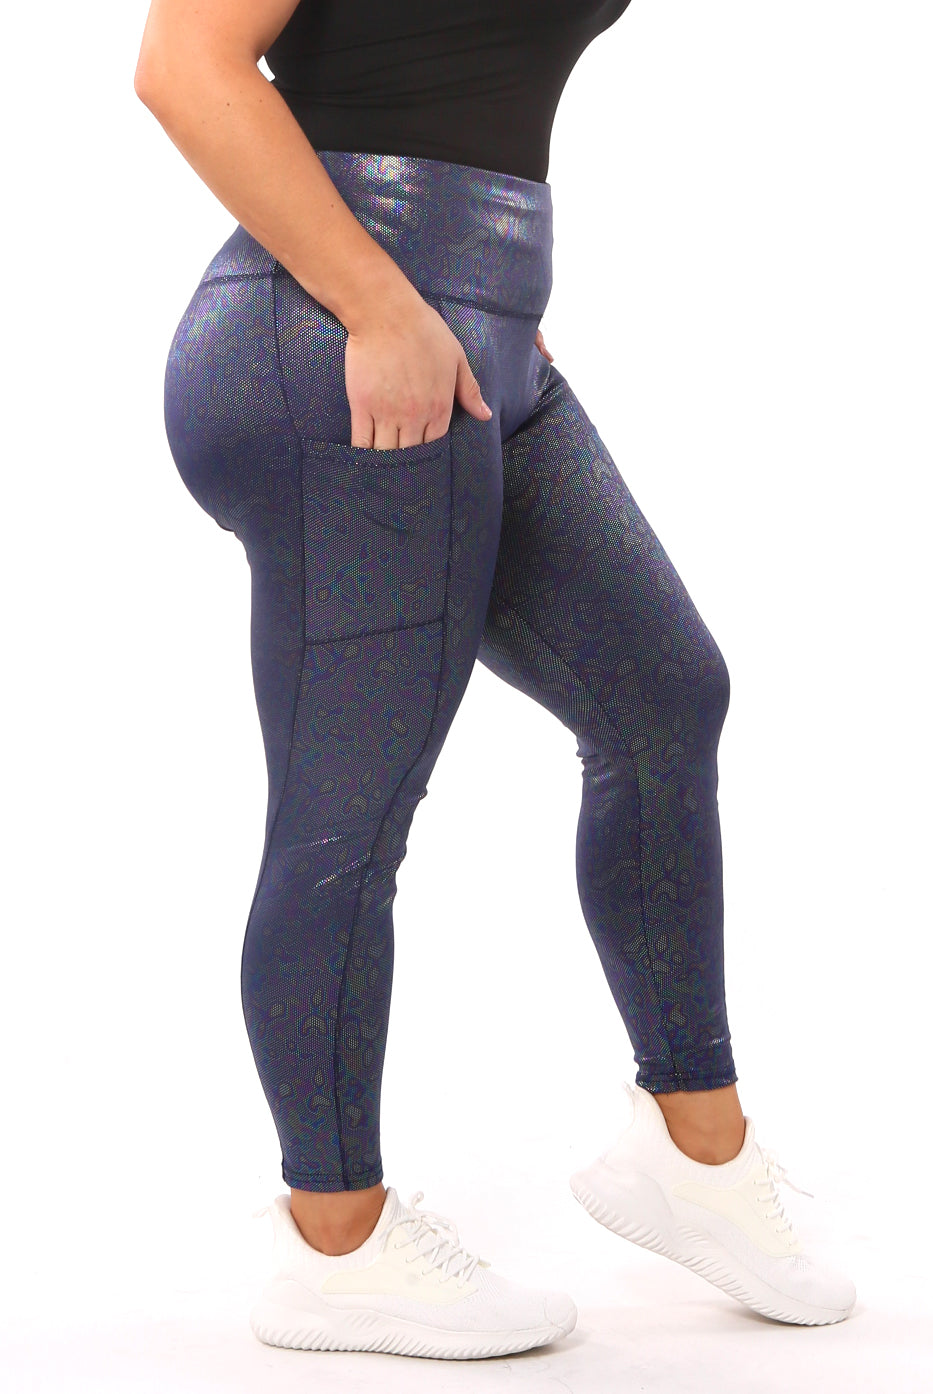 Wholesale Womens Shiny Heat Seal Print High Waist Tummy Control Sports Leggings With Pockets - Blue - S&G Apparel